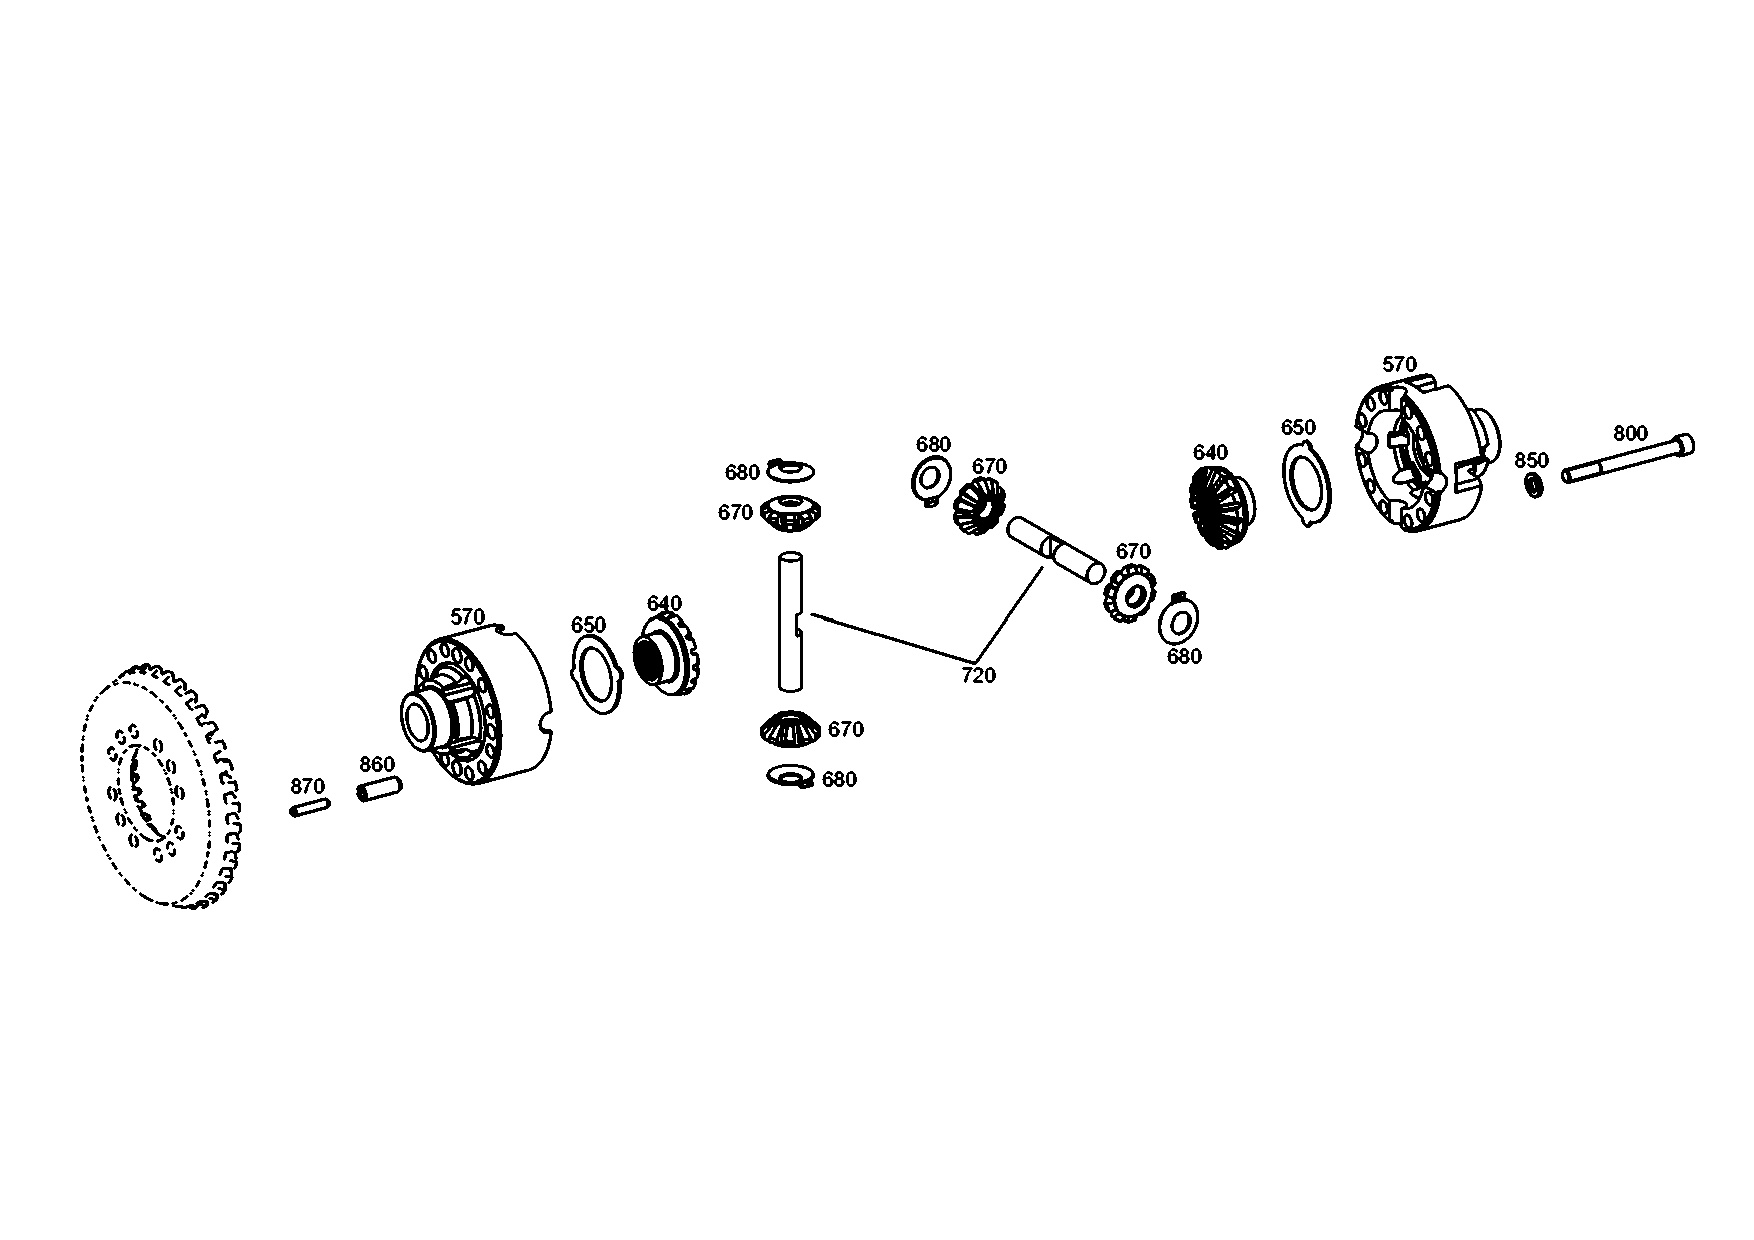 drawing for CATERPILLAR INC. 029257 - AXLE BEVEL GEAR (figure 4)